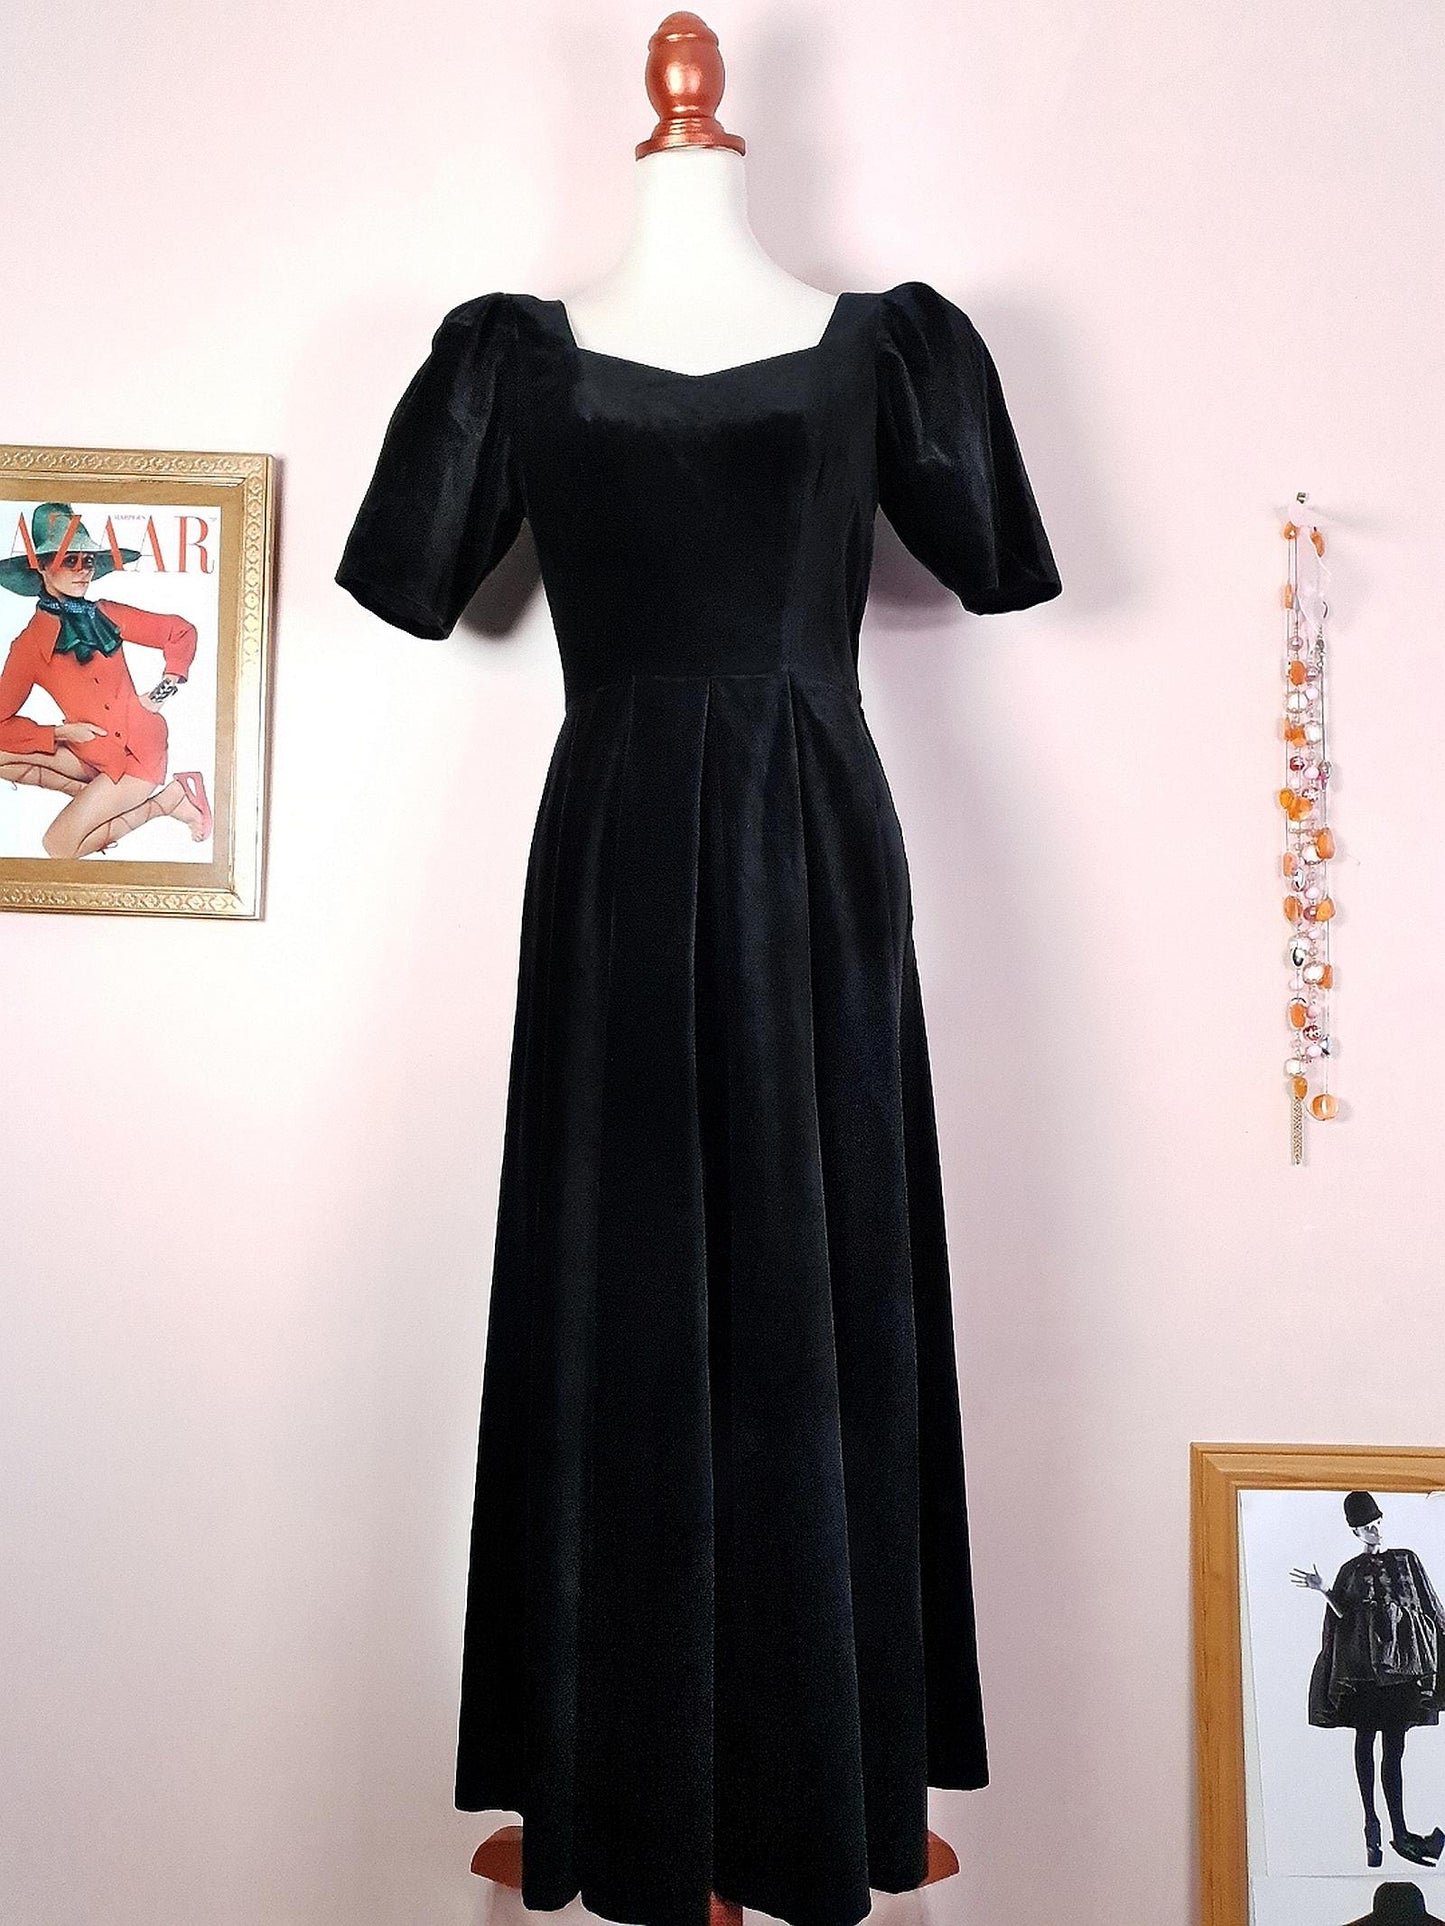 English Classics - Laura Ashley Vintage 1980s Black Velvet Dress - Size 10